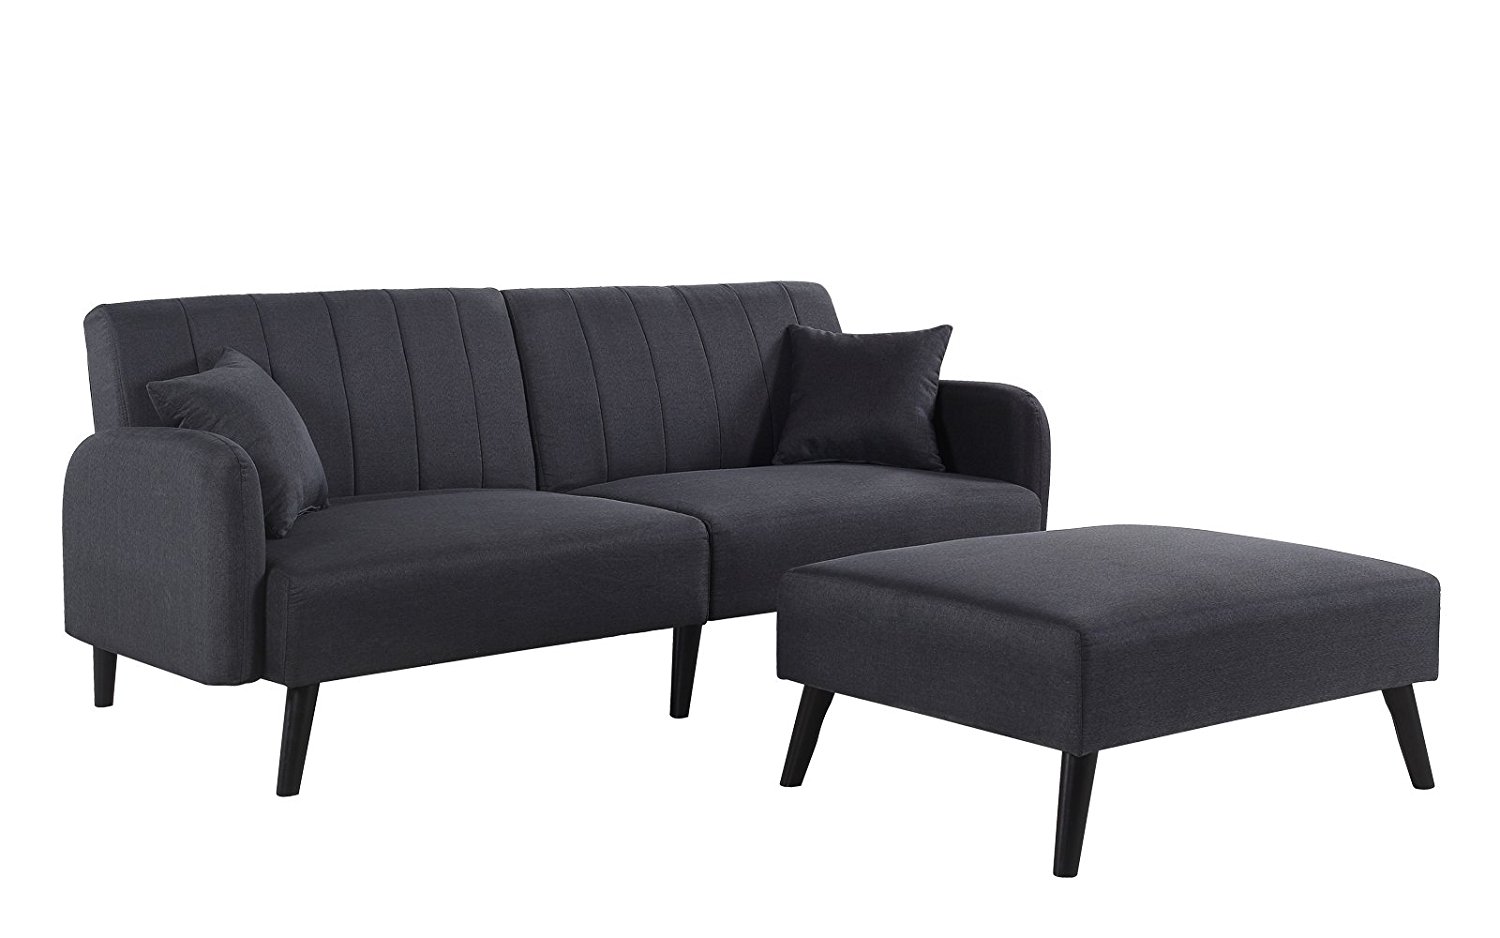 Mid-Century Modern Linen Fabric Futon Sofa Bed, Living Room Sleeper Couch (Dark Grey)